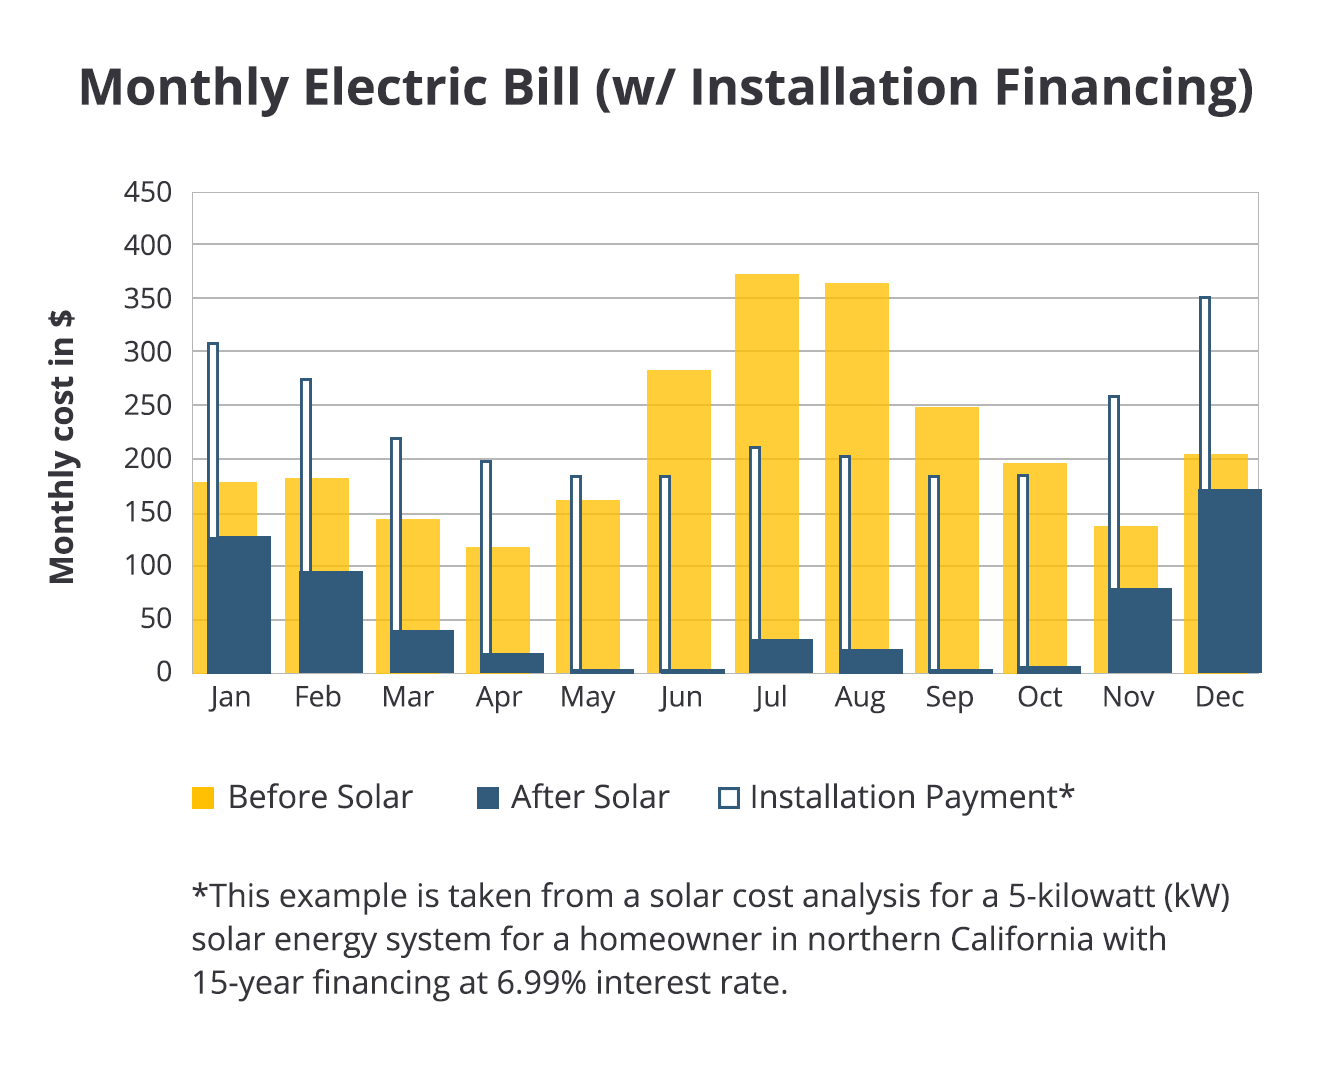 Solar Panel Installation Costs